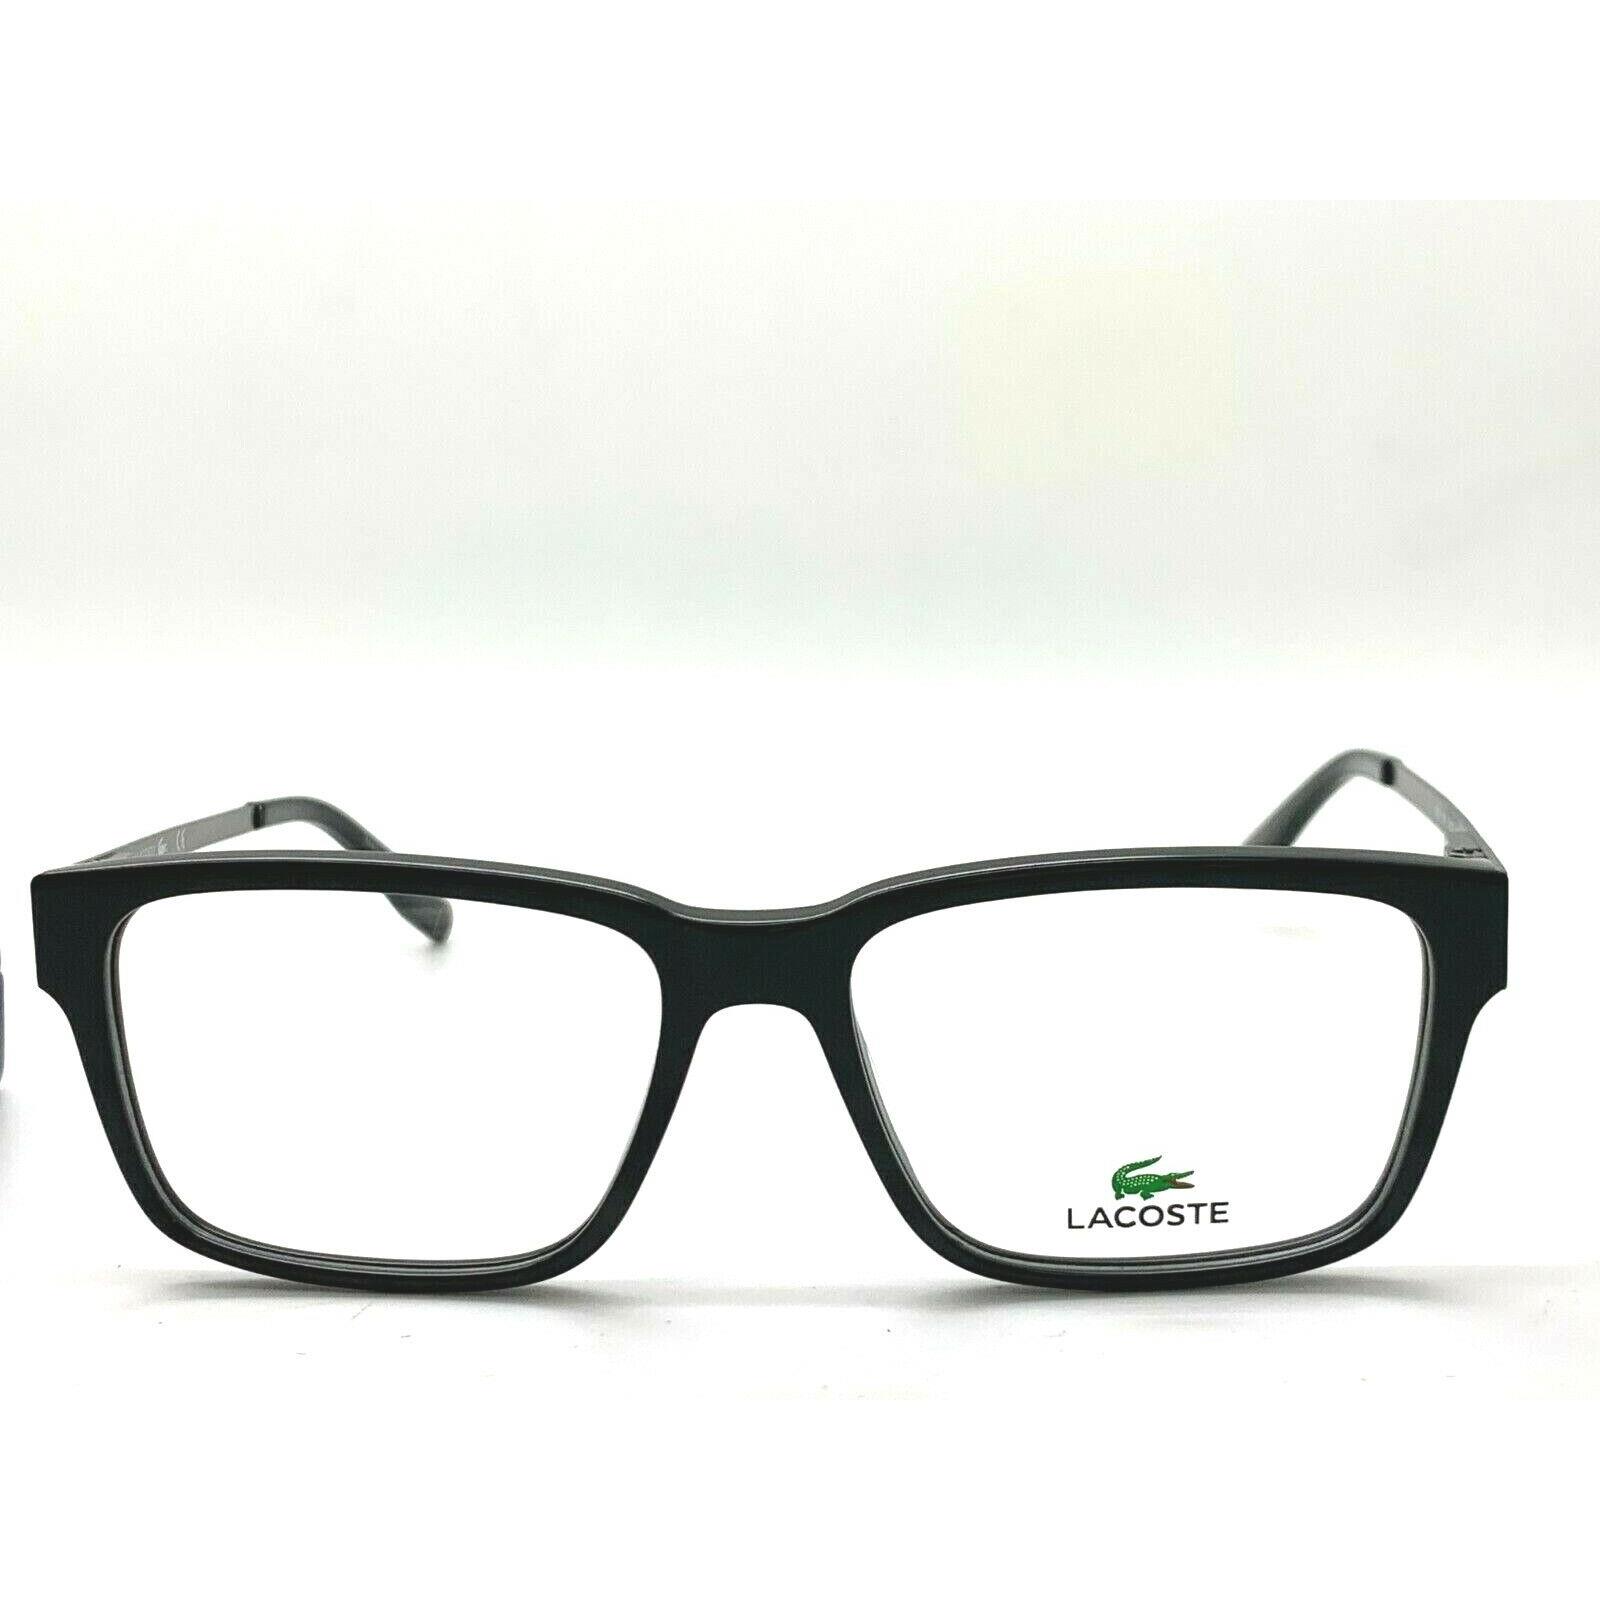 Lacoste eyeglasses  - Black Frame